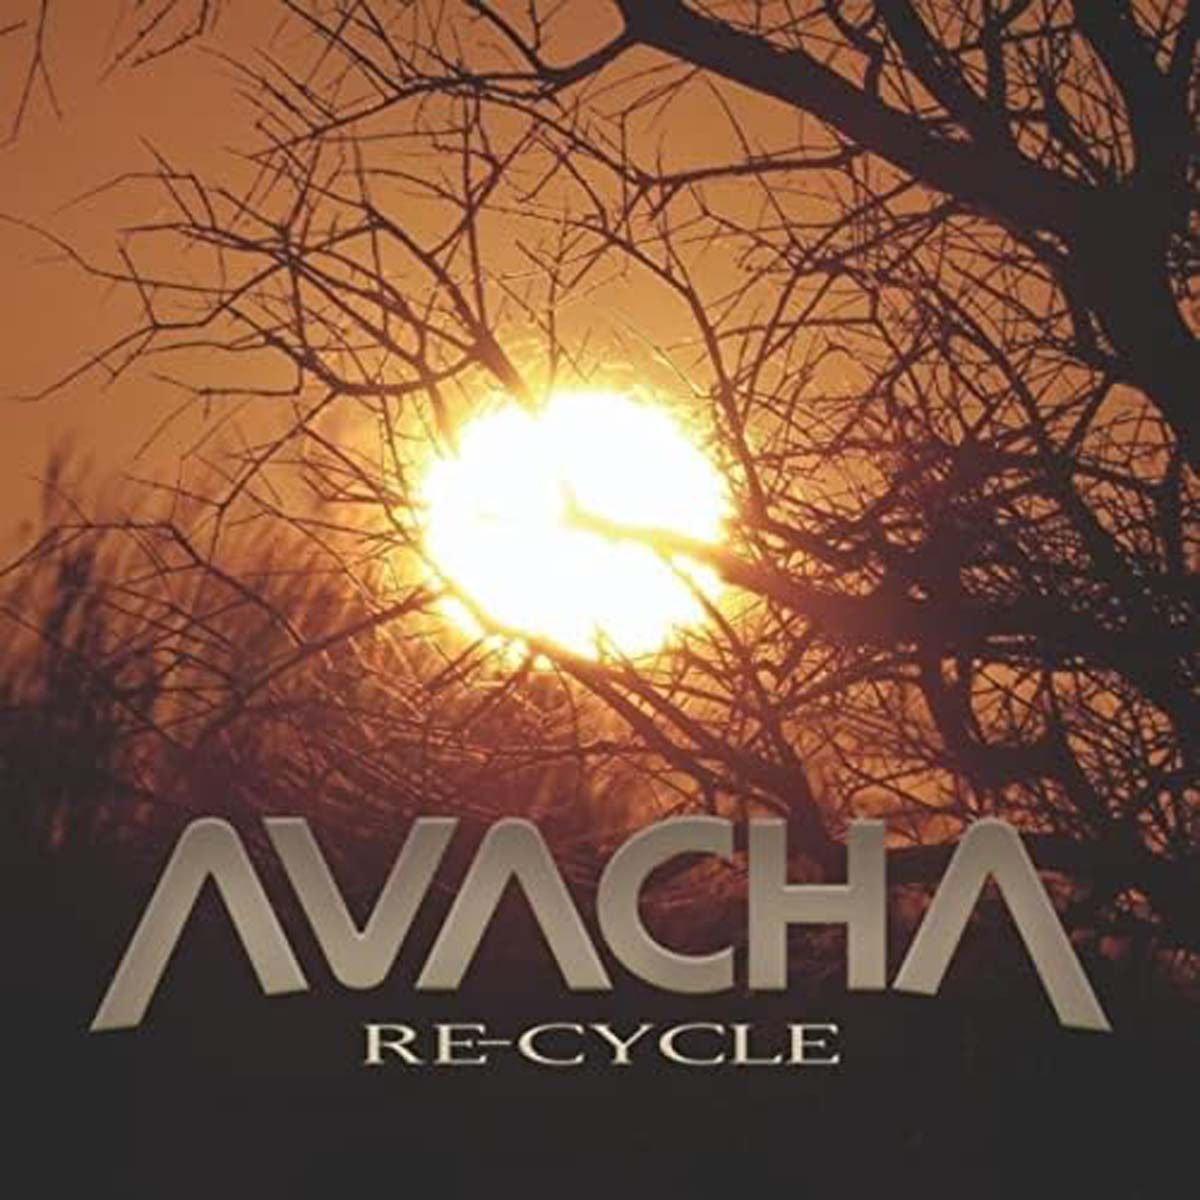 Avacha - Re-Cycle